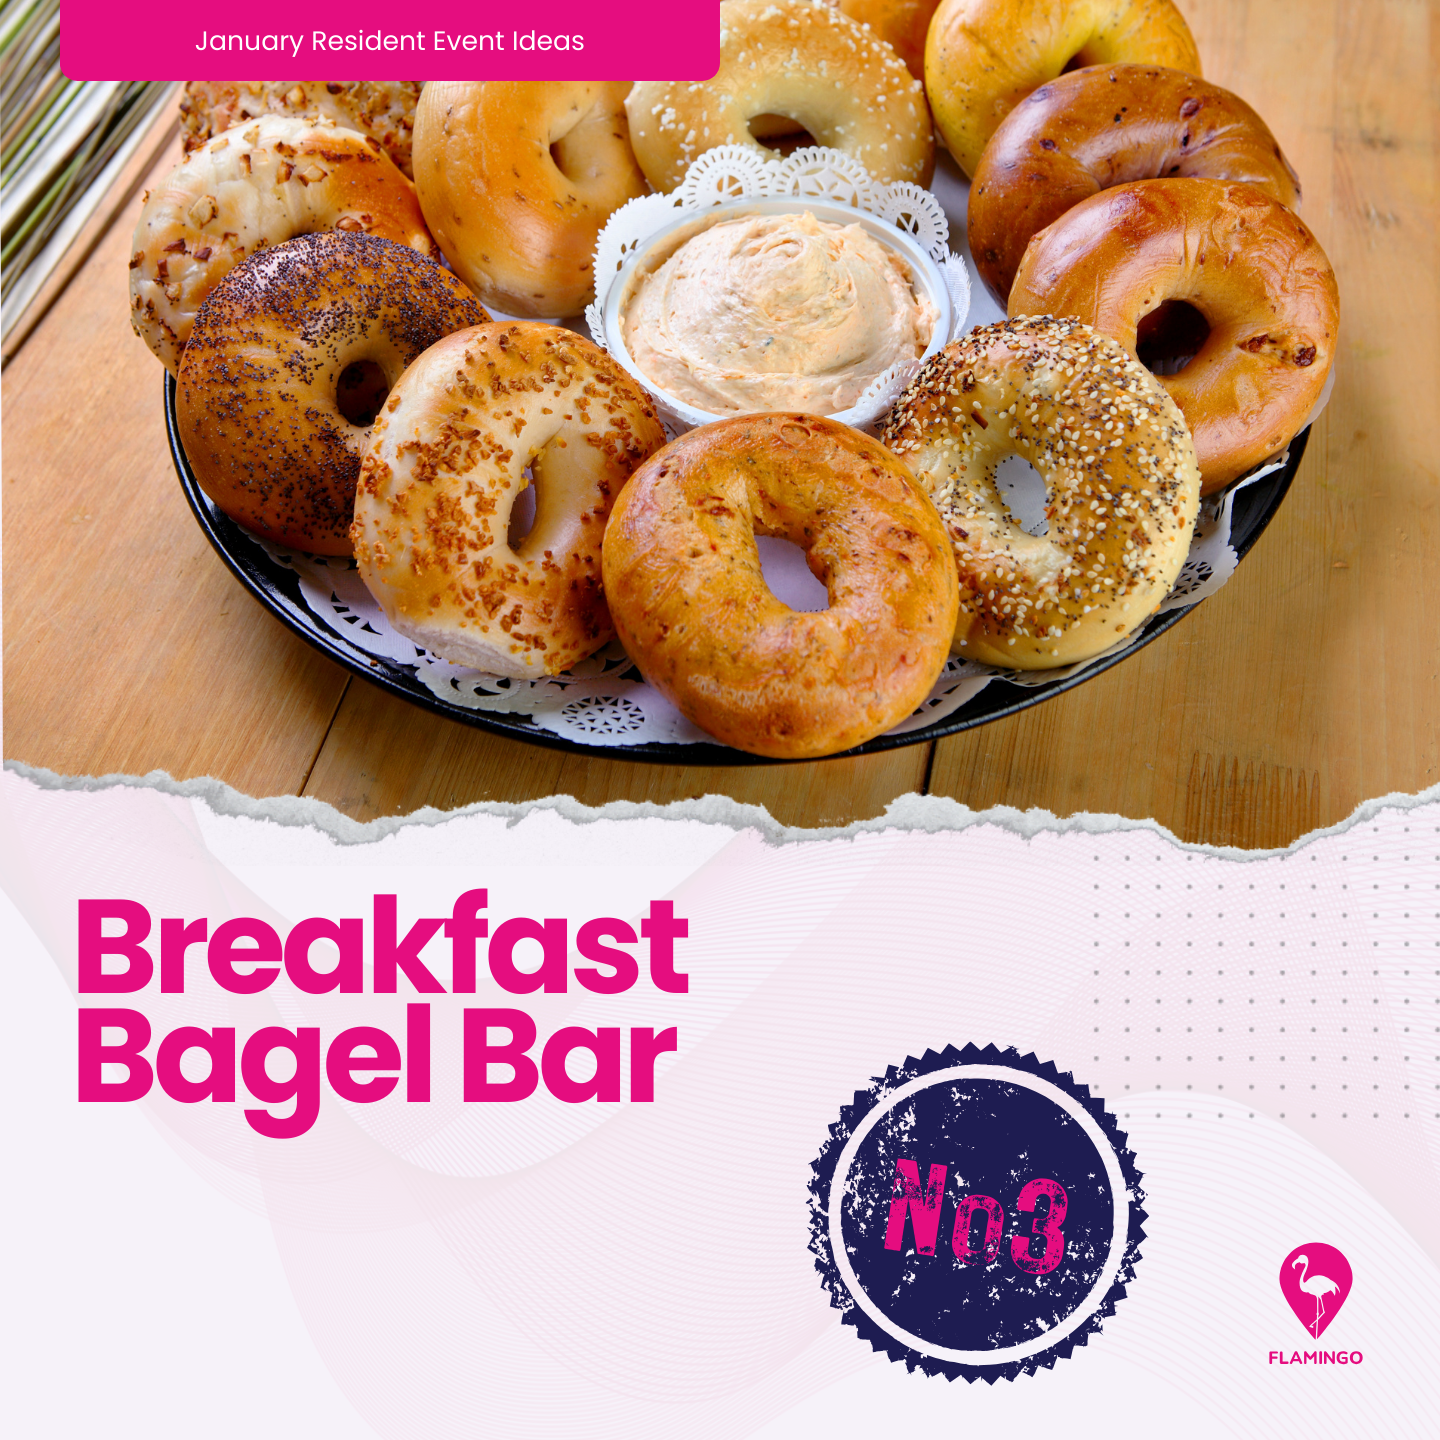 Breakfast Bagel Bar | January Resident Event Ideas